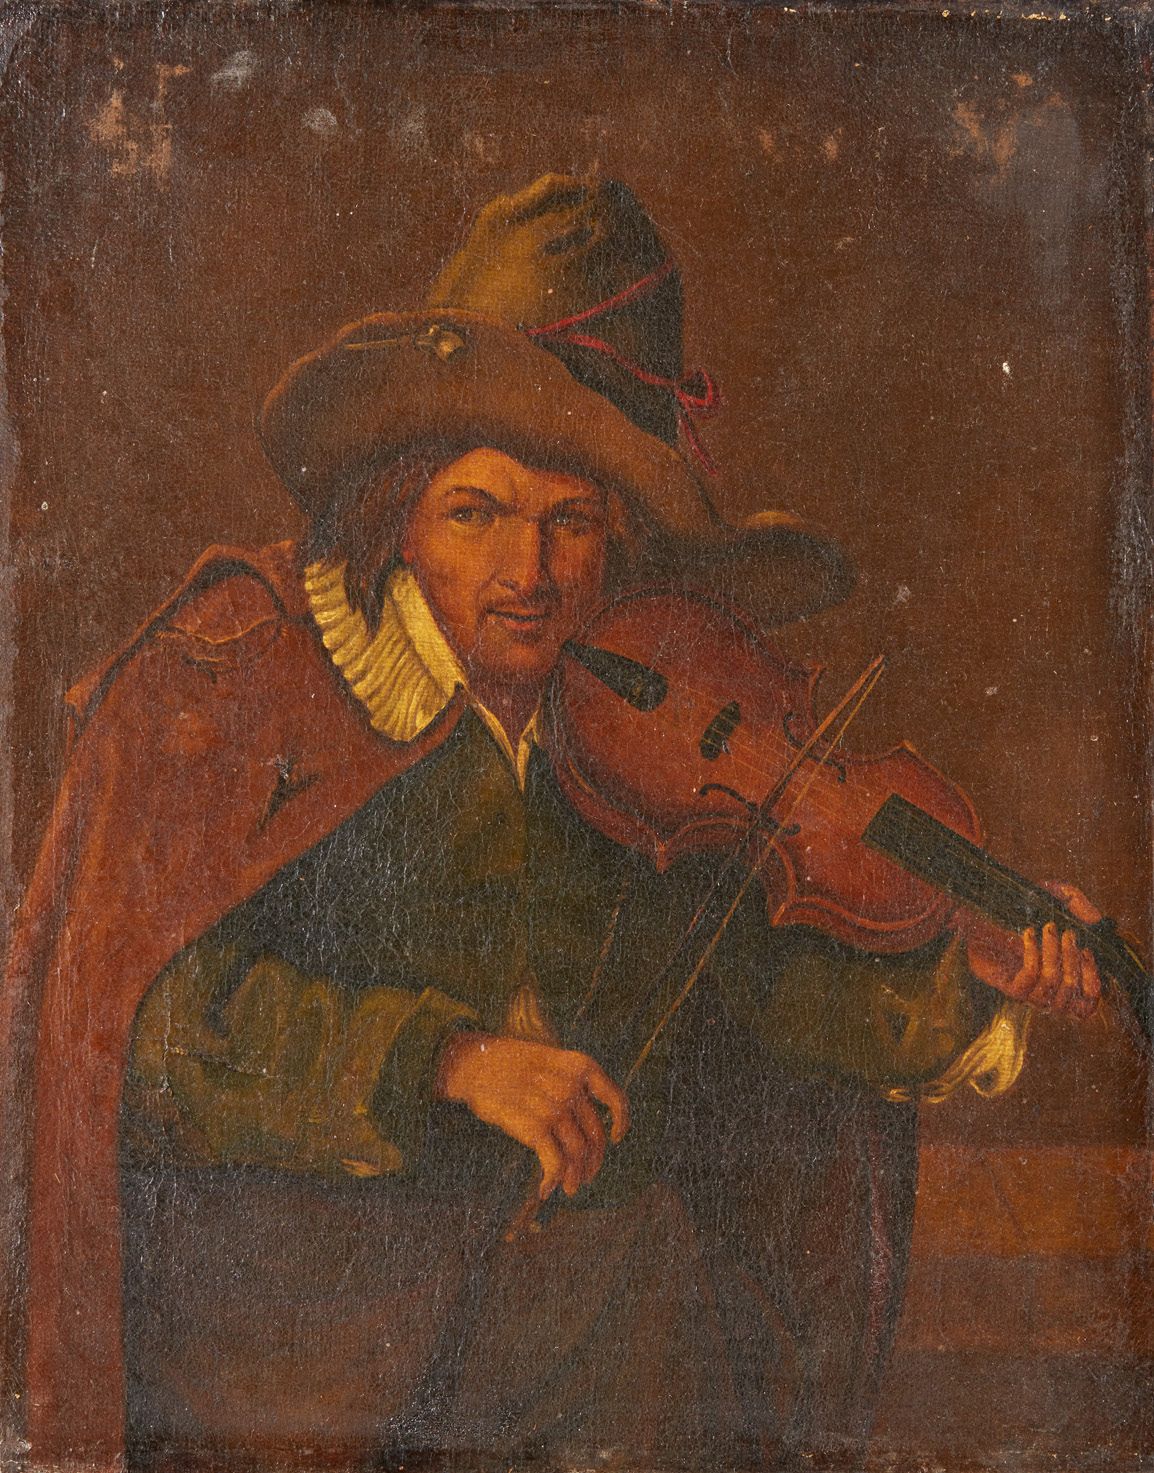 Ecole Italienne du XVIIIe siècle 小提琴手
帆布 50,5 x 40 cm
(未装裱)